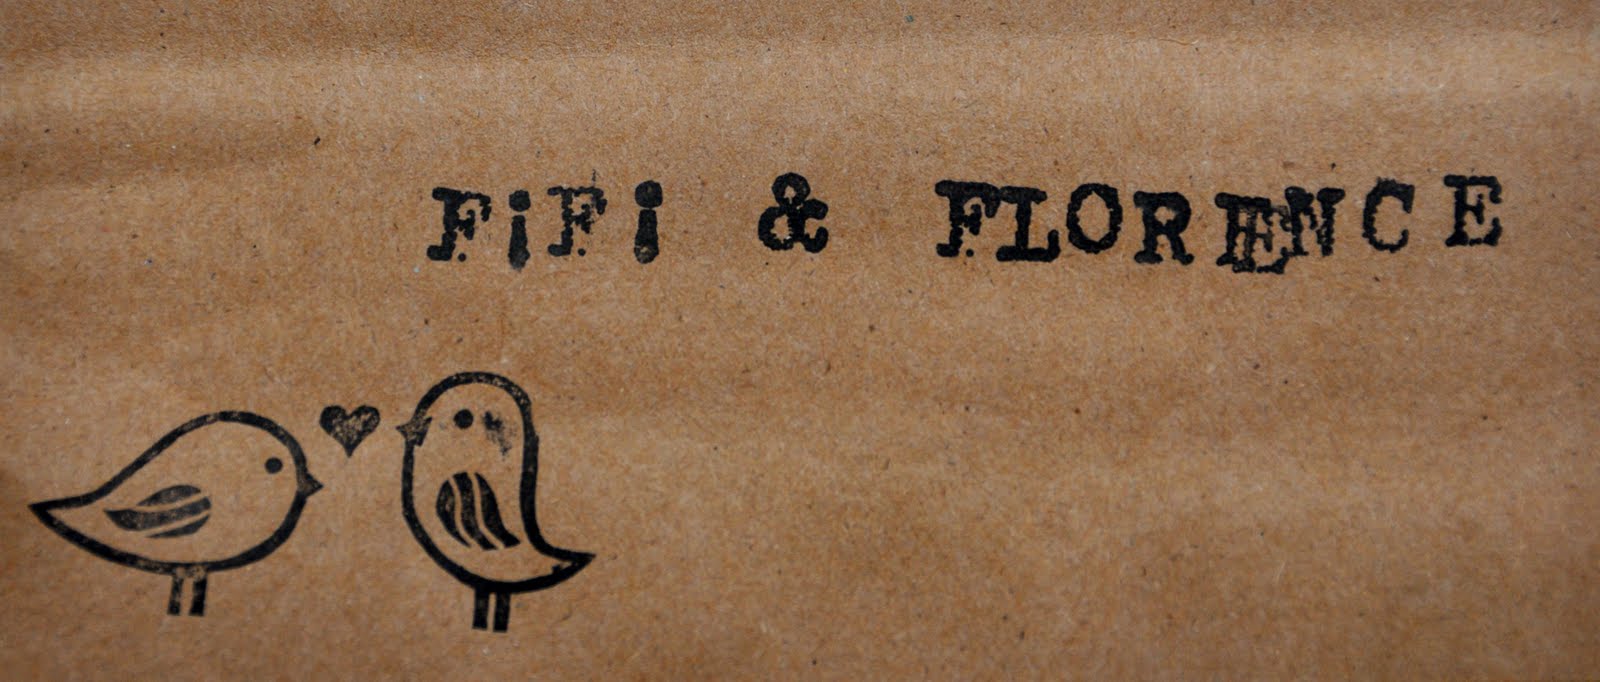 Fifi & Florence